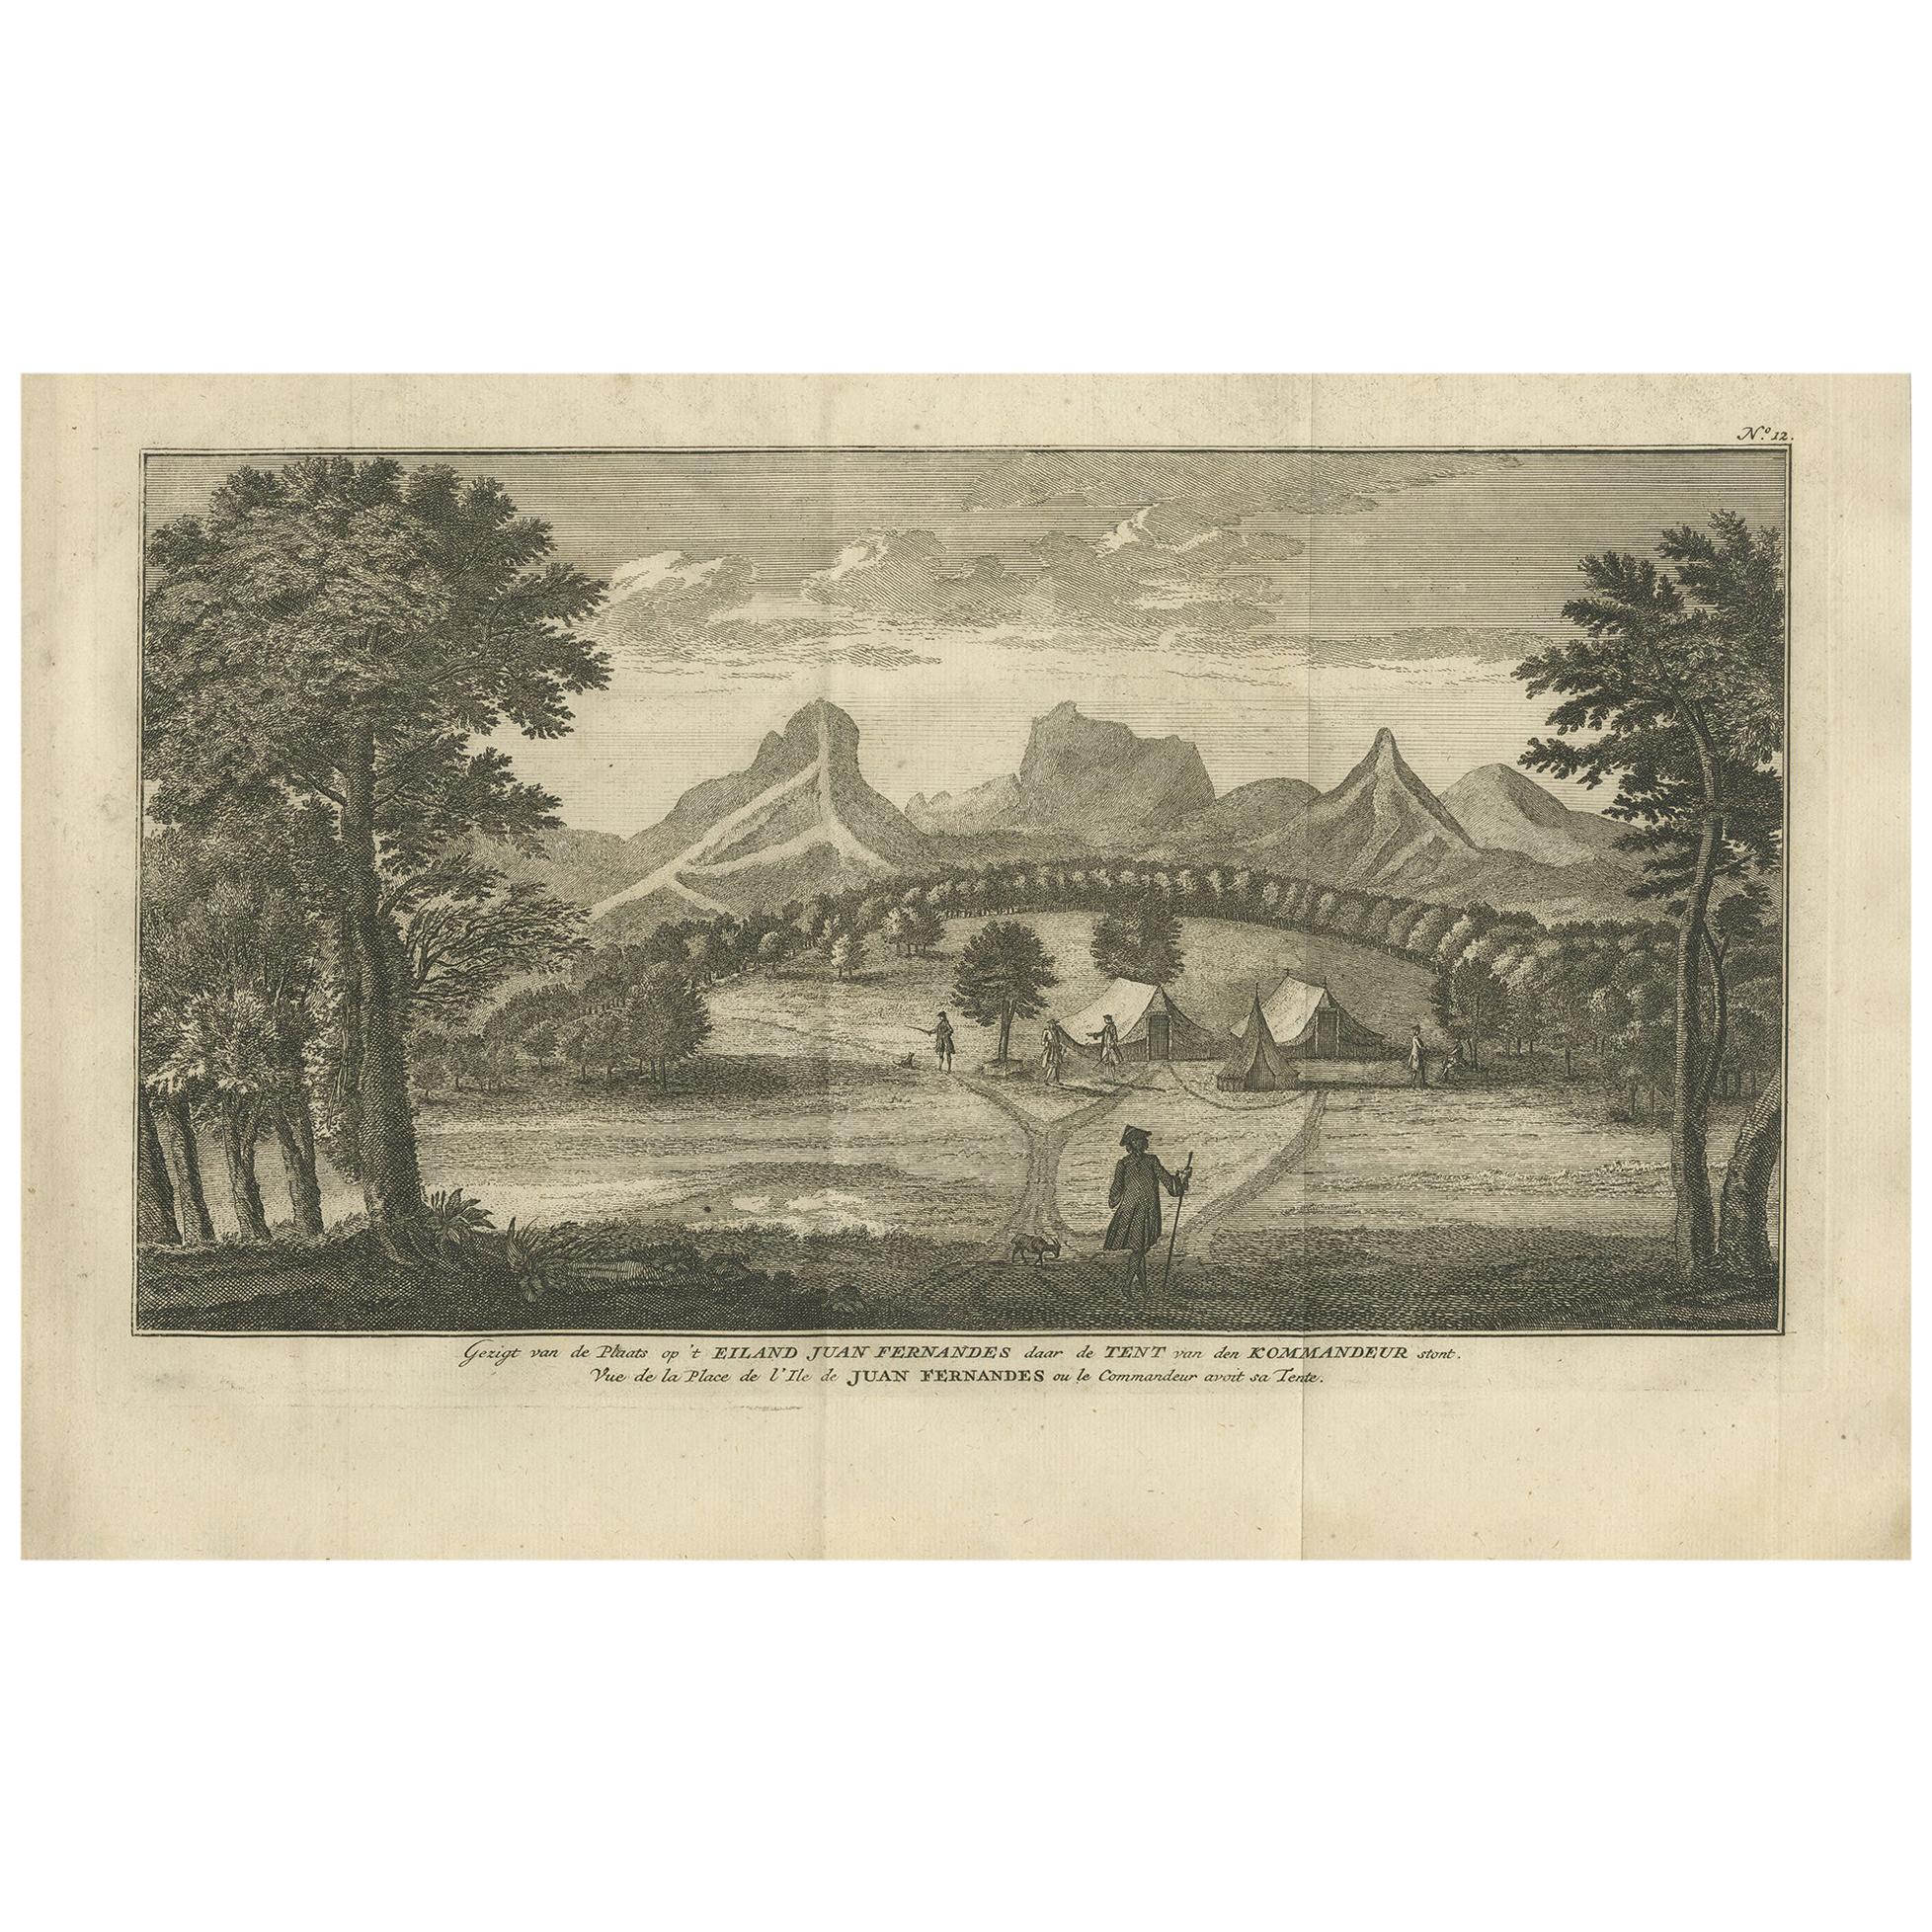 Antique Print of an Encampment on Juan Fernández Island by Anson '1749' For Sale